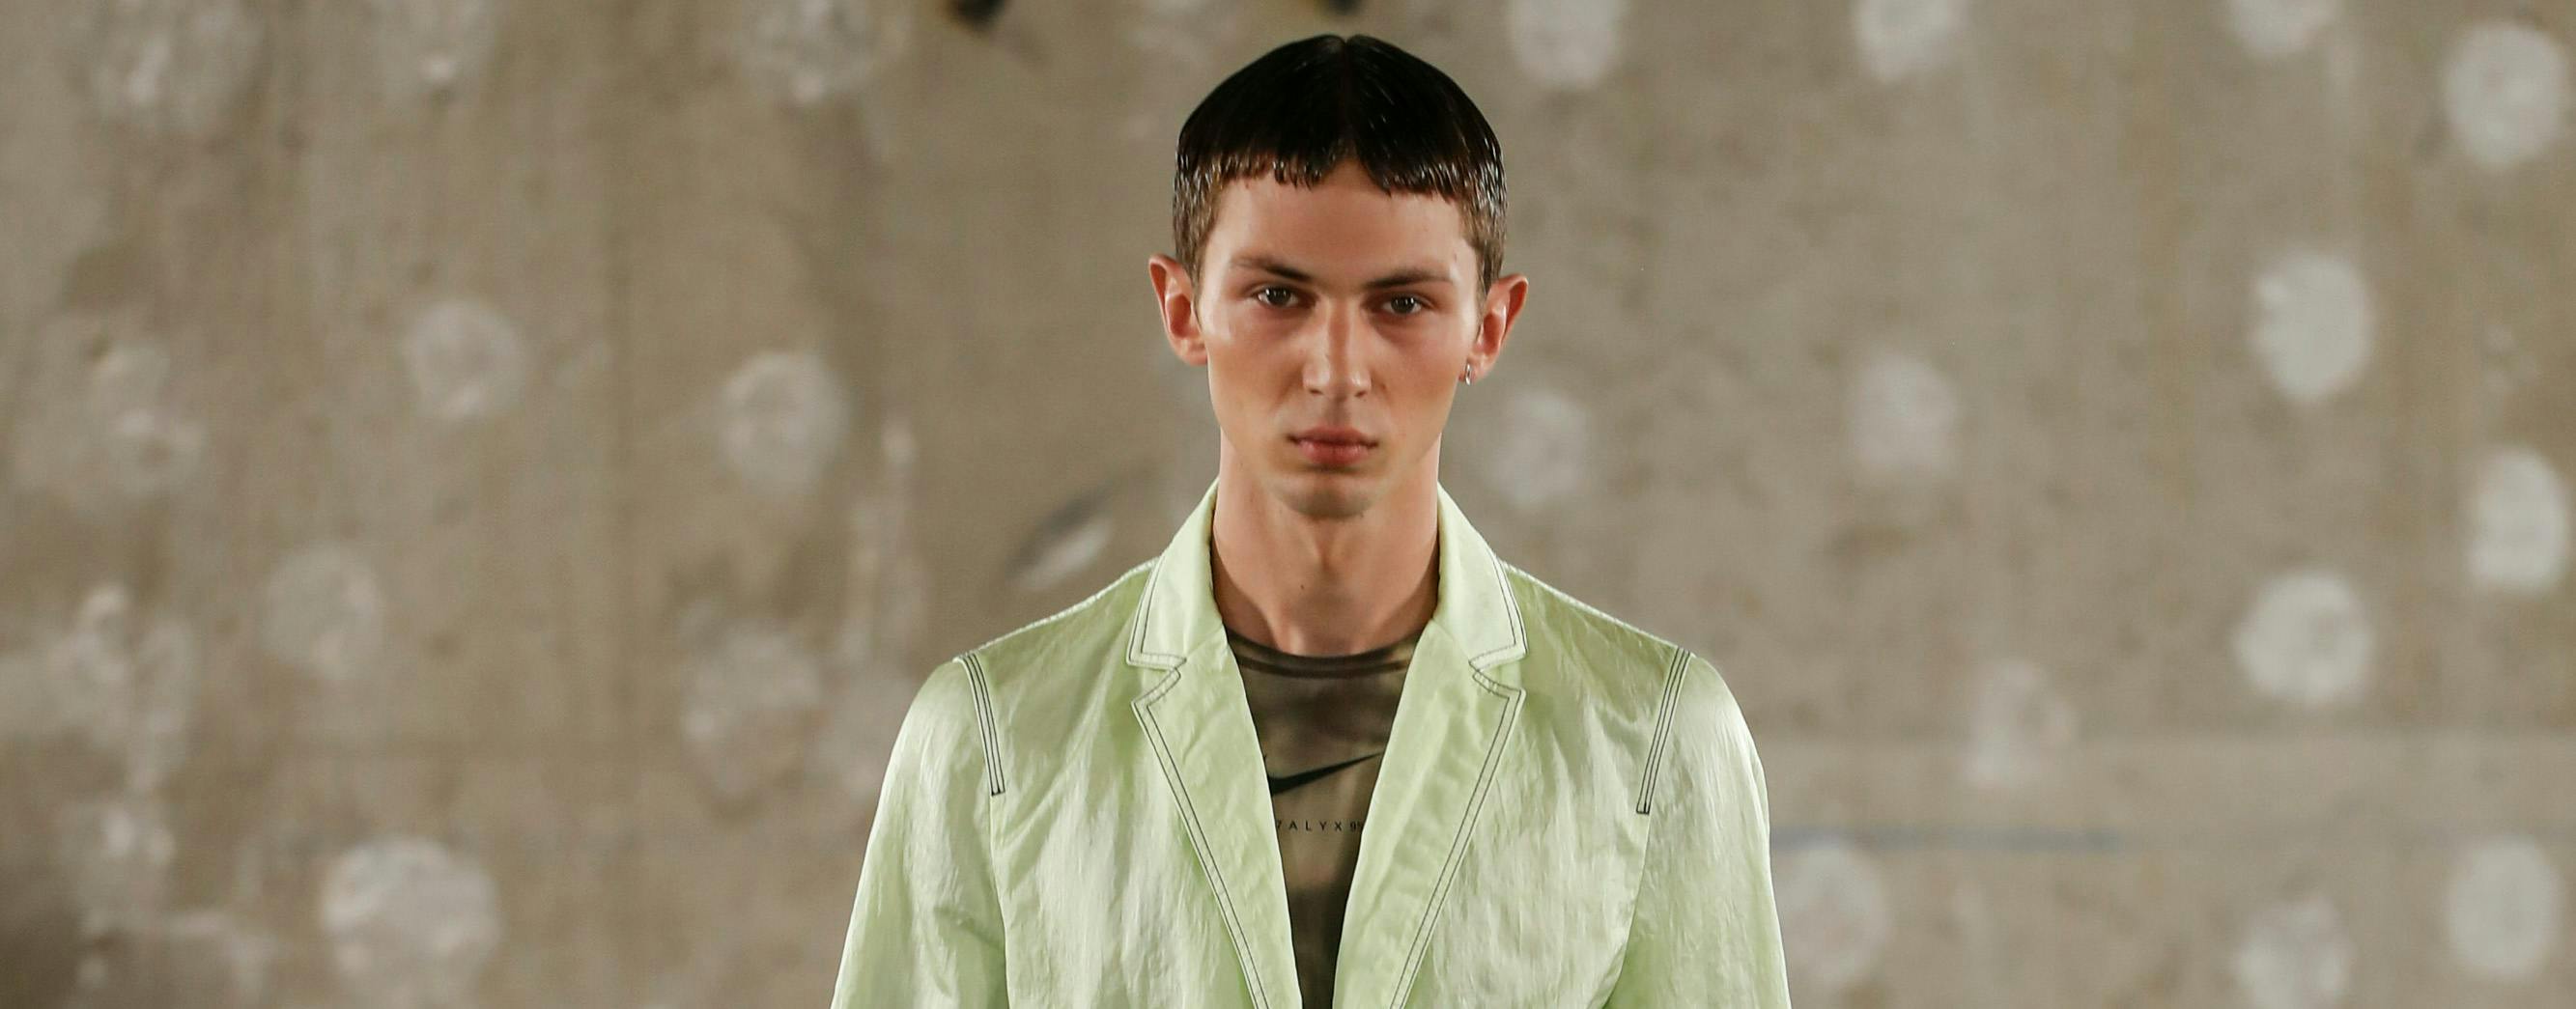 clothing apparel person human jacket coat